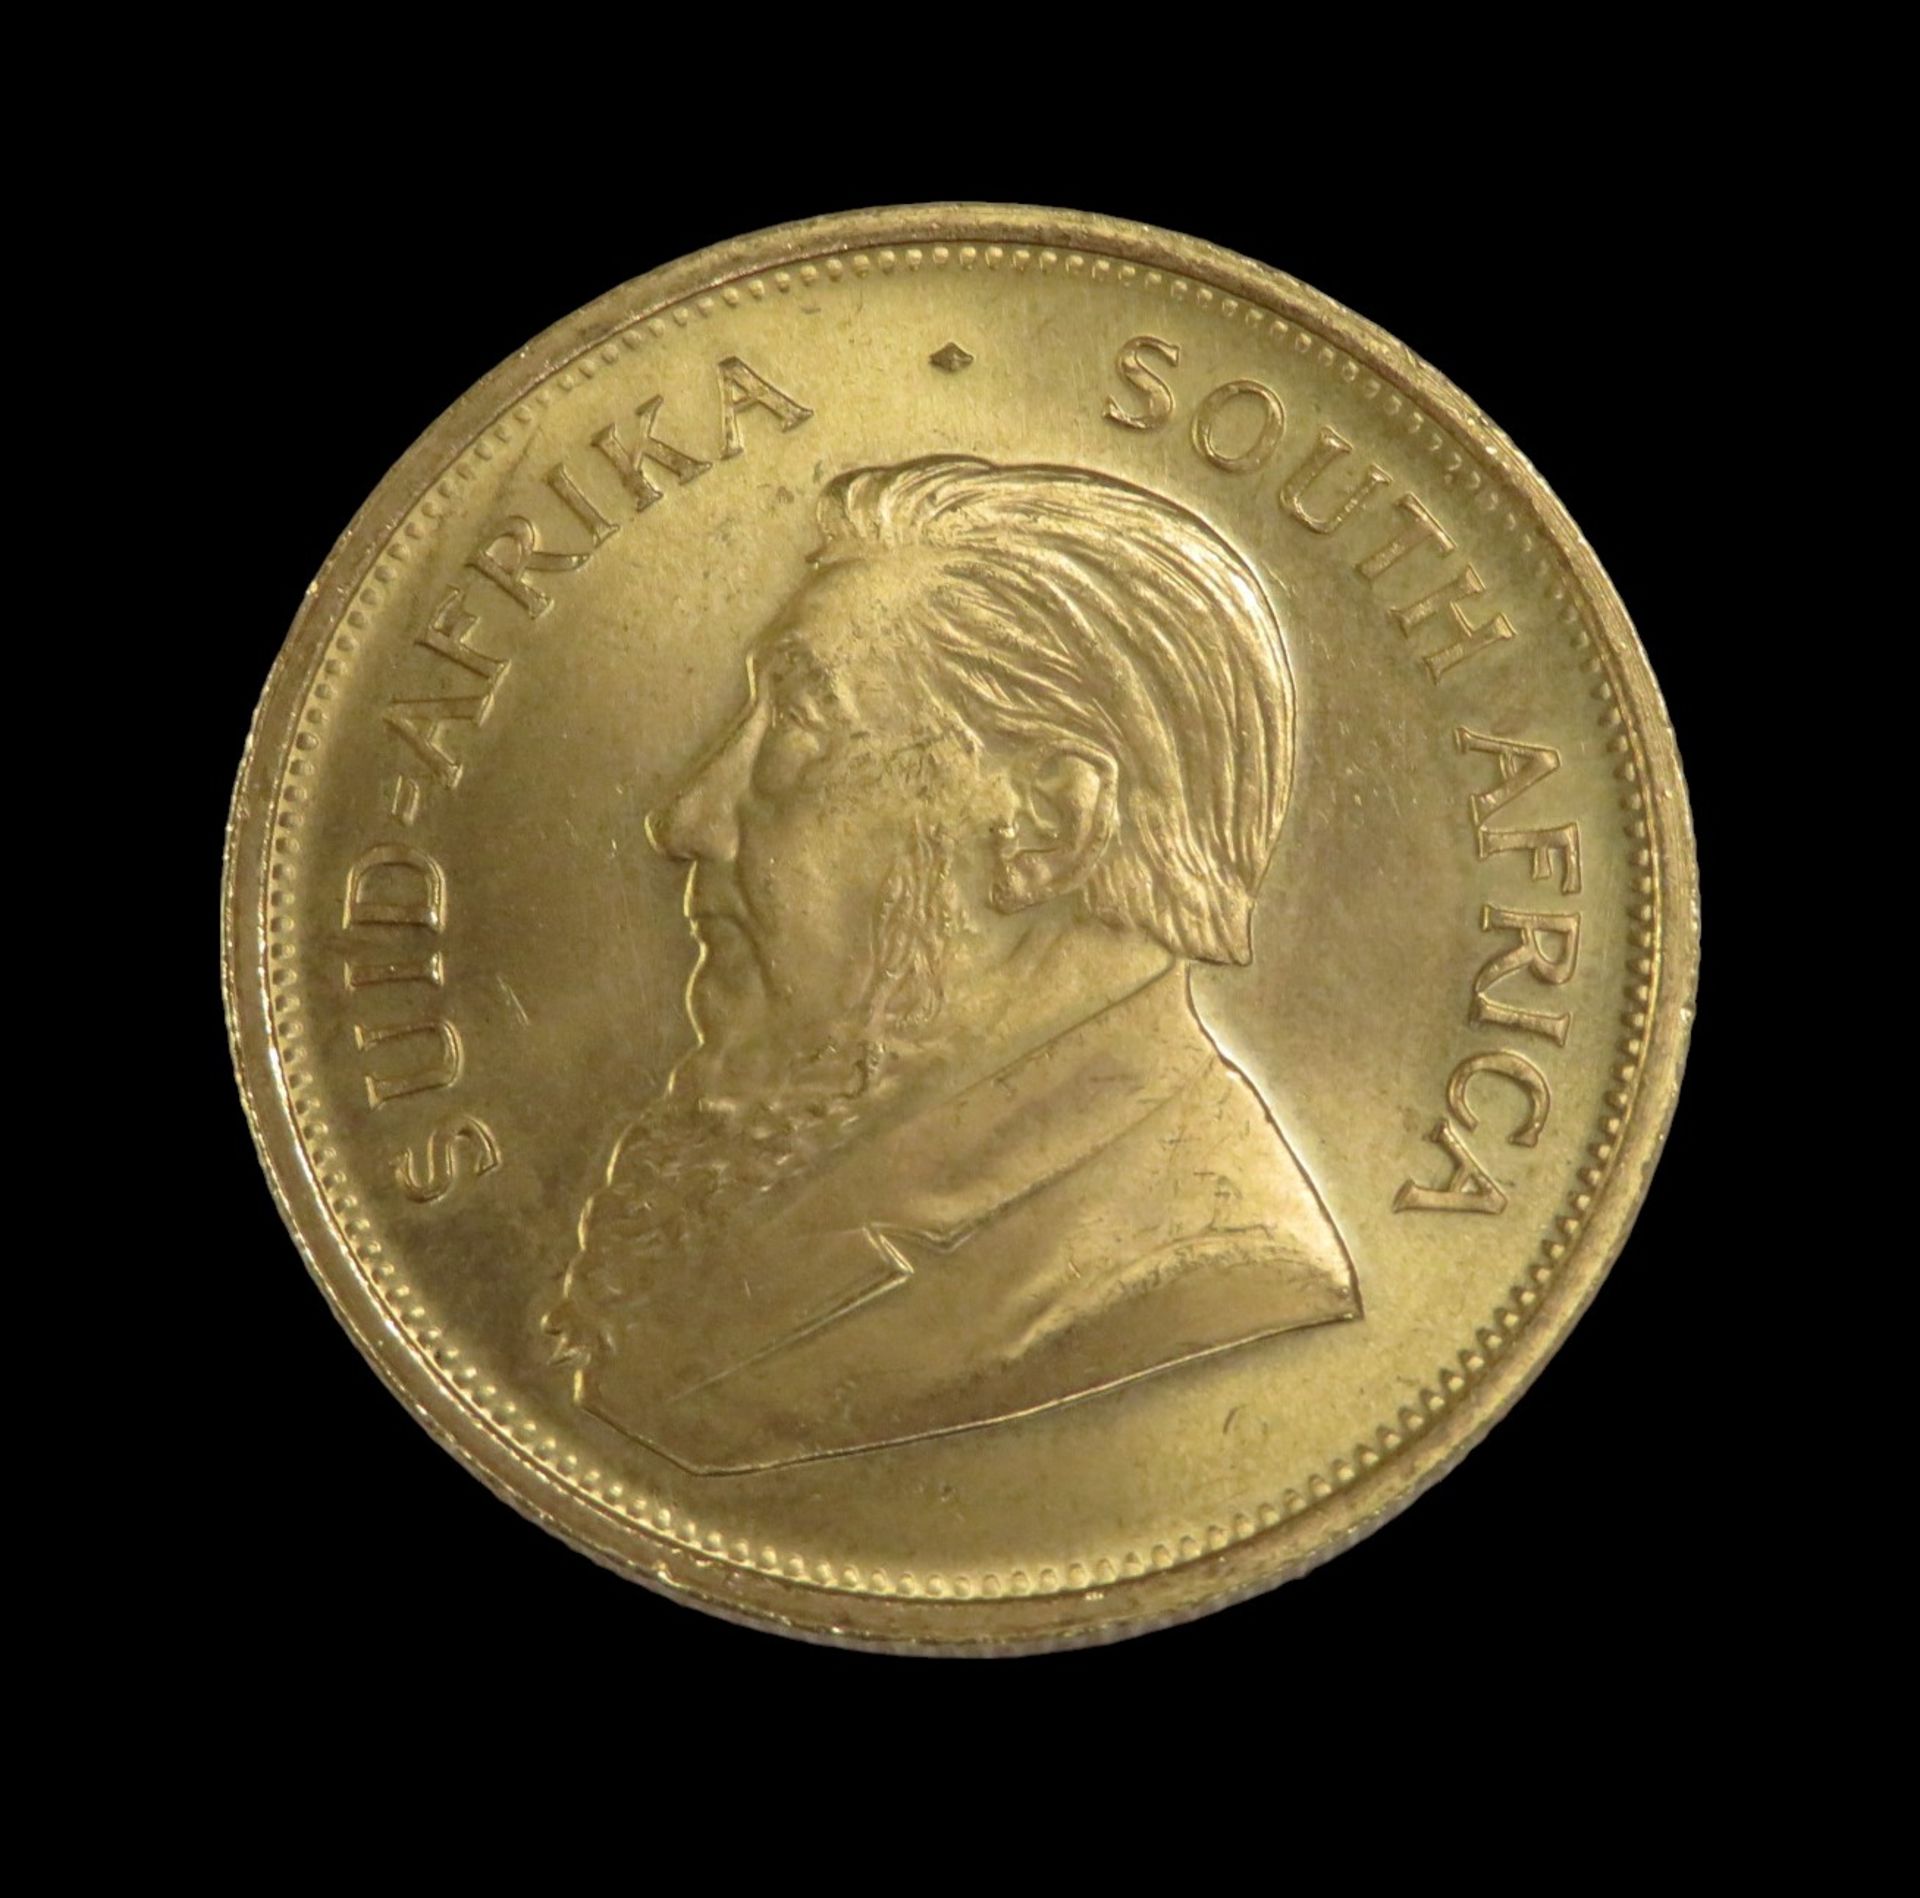 Goldmünze, Krügerrand, Südafrika, 1971, 1 OZ, Gold 916,66/000, 33,9 g, d 3,27 cm. - Image 2 of 2